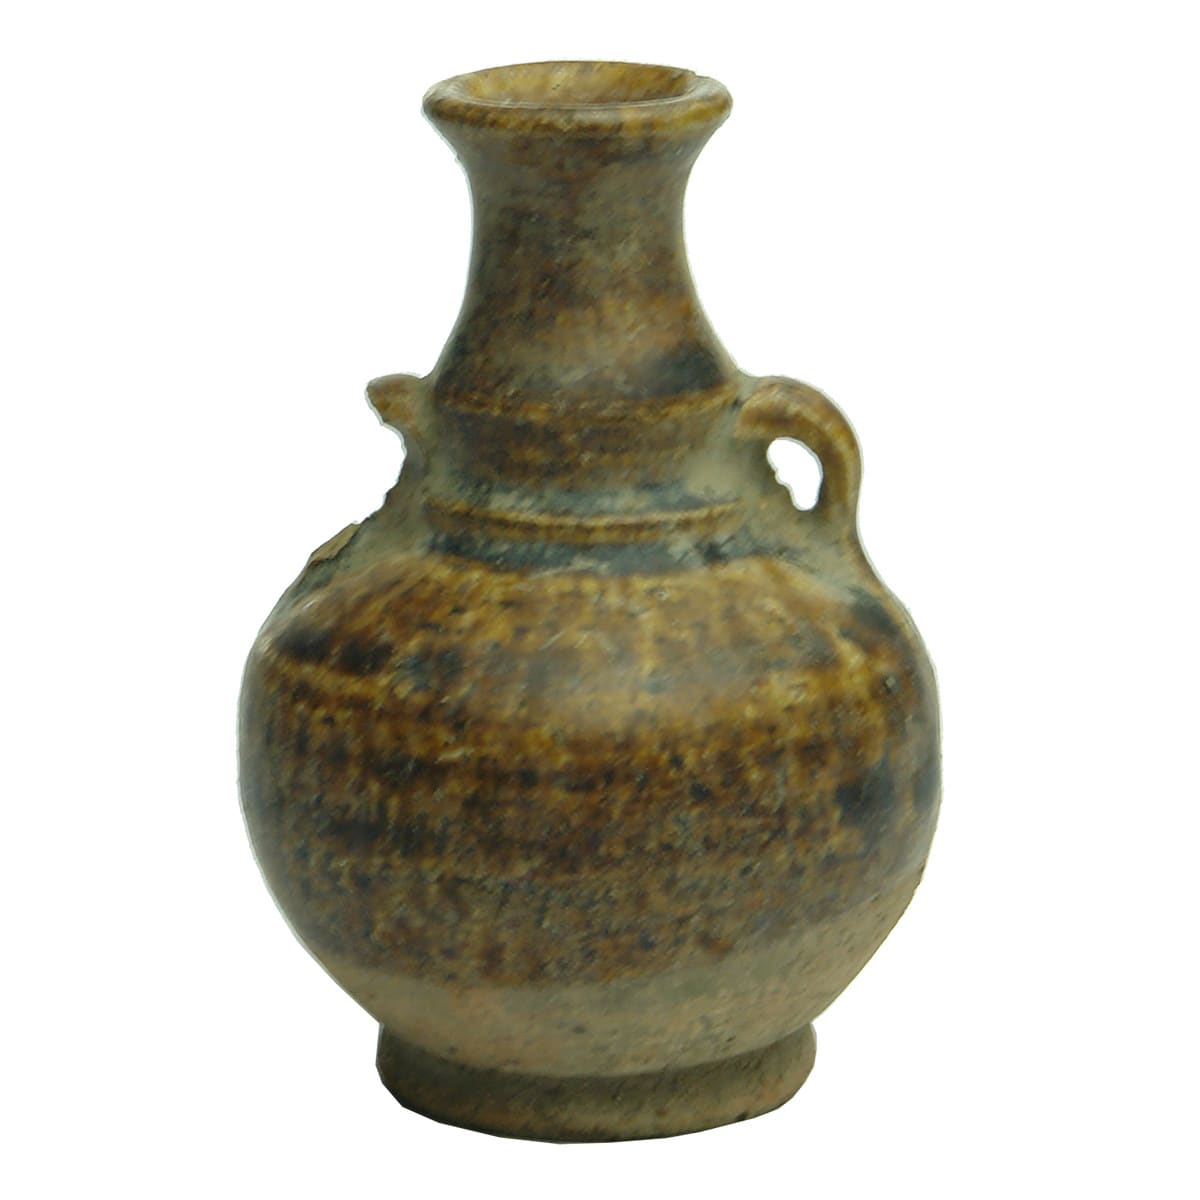 Small brown glazed handled pot. Thai Ornamental. Circa 1200 - 1500 AD.